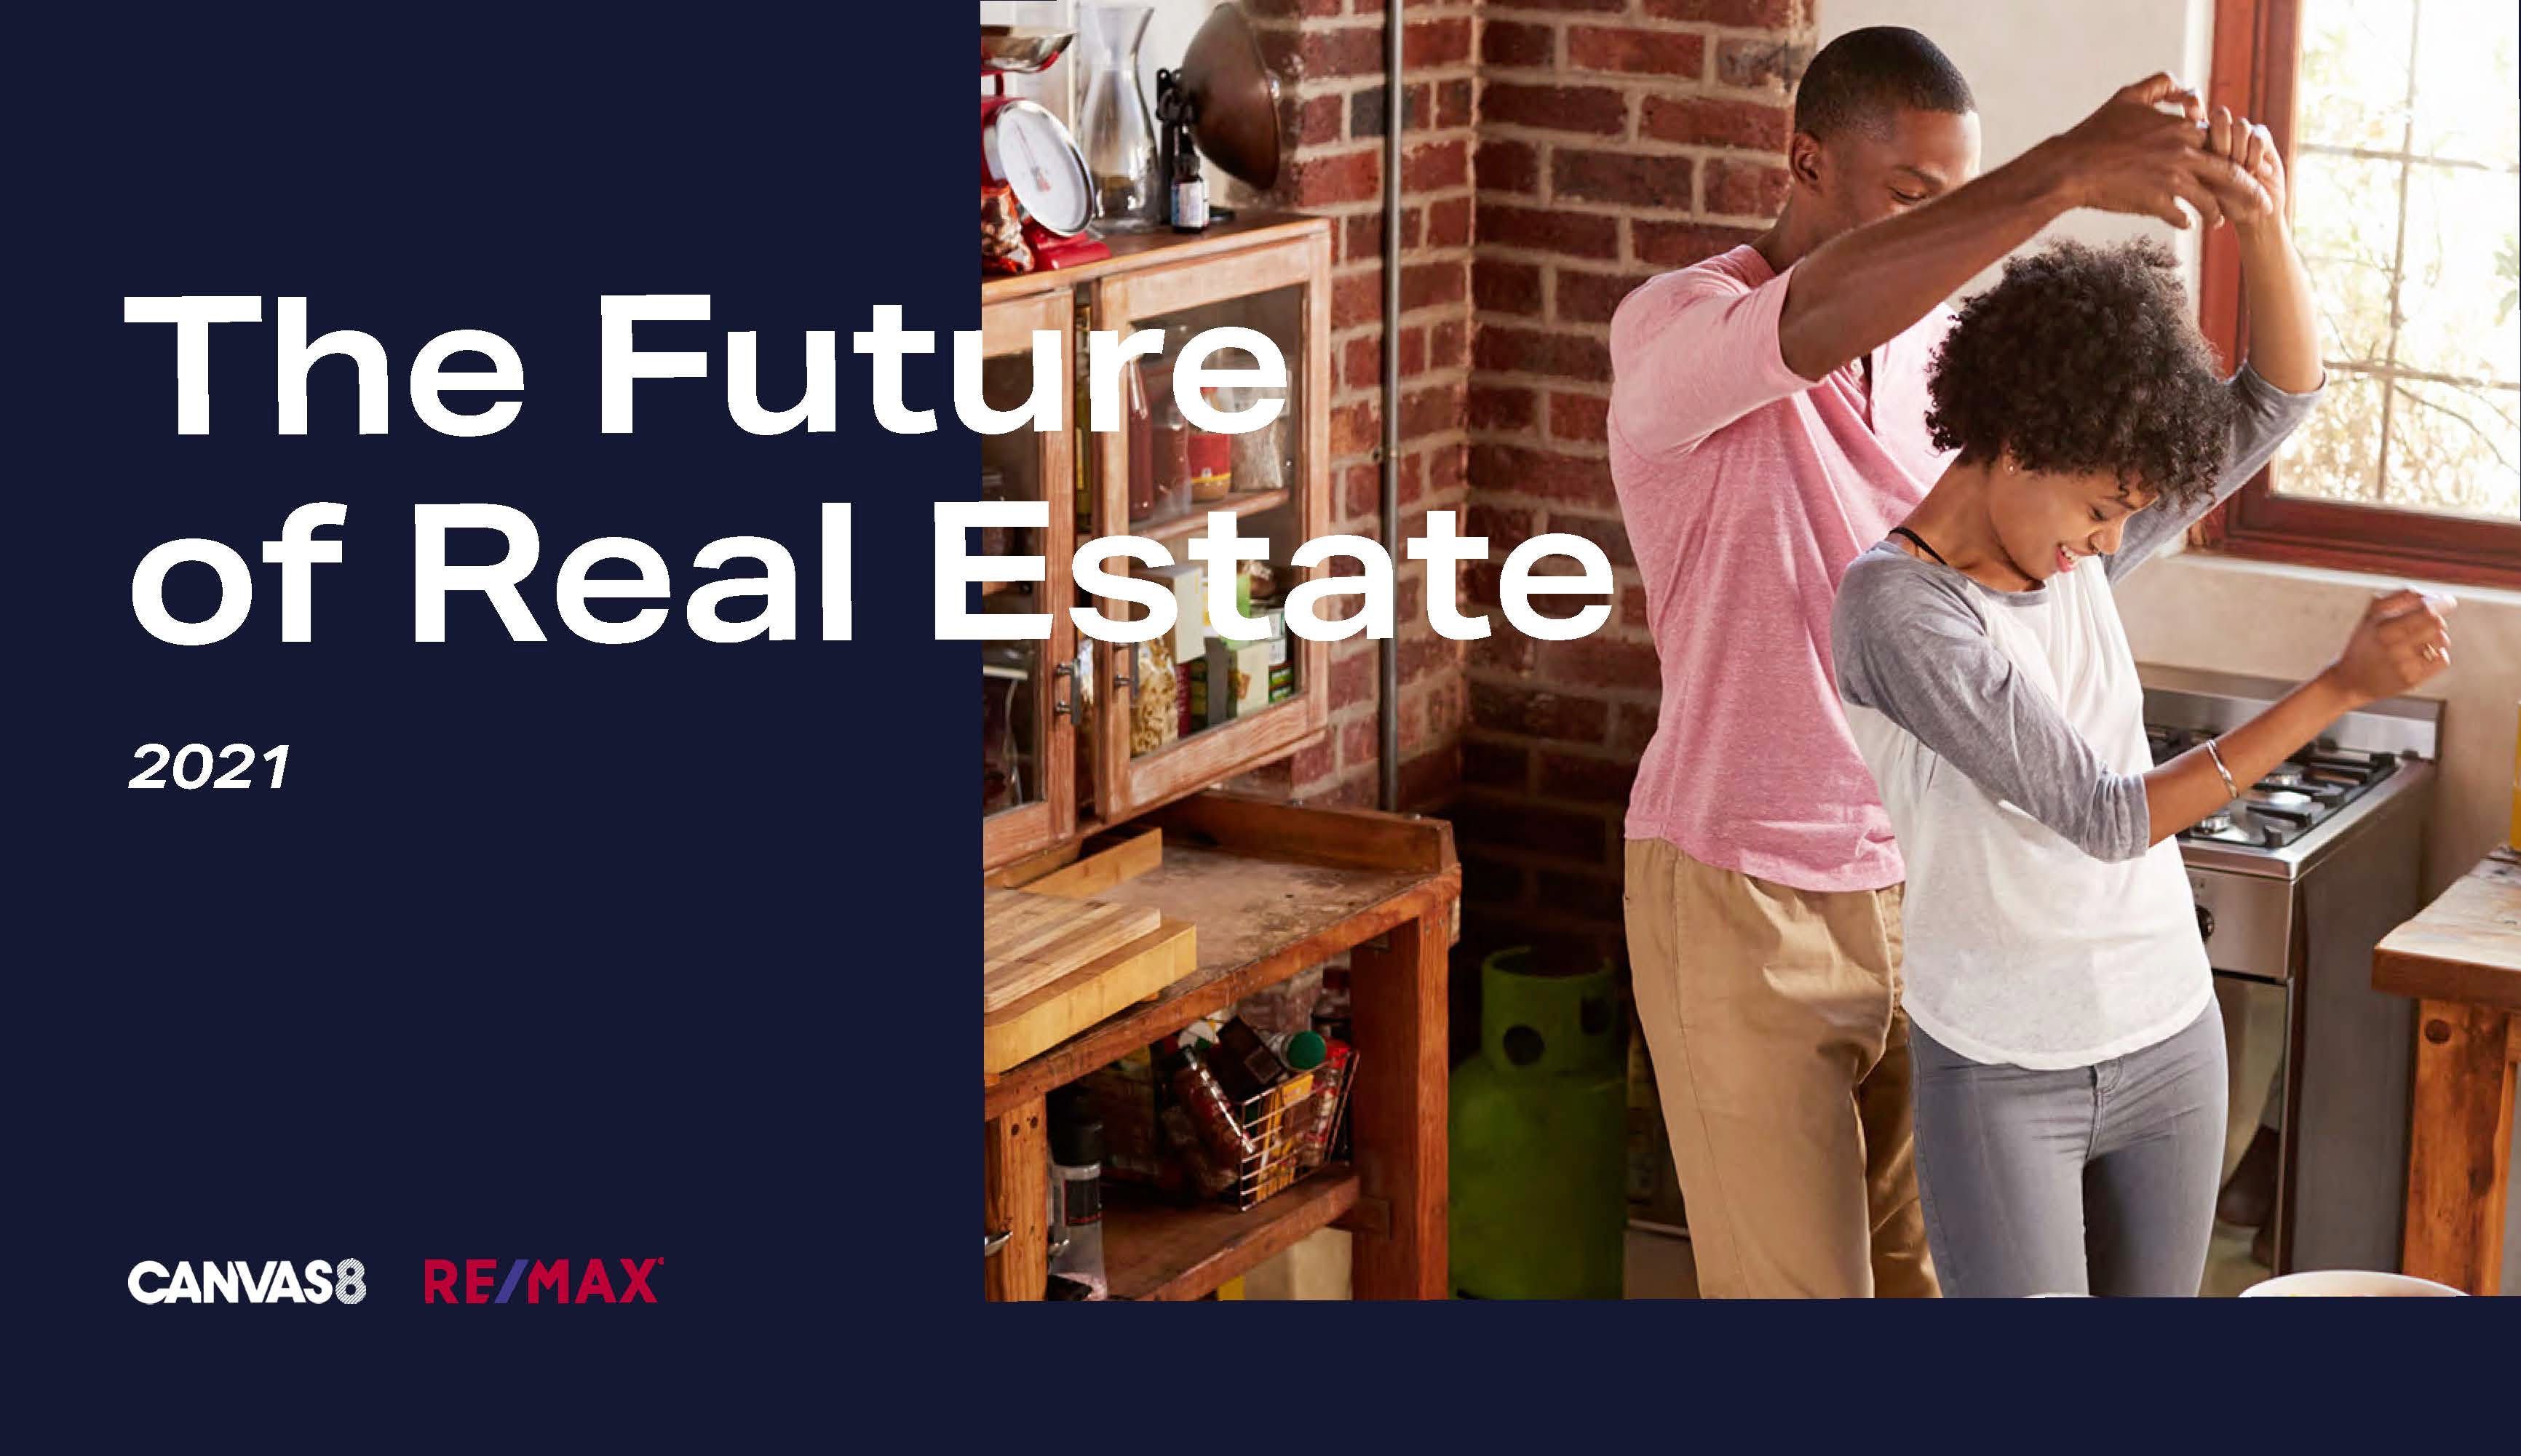 remax 2021 future of real estate report